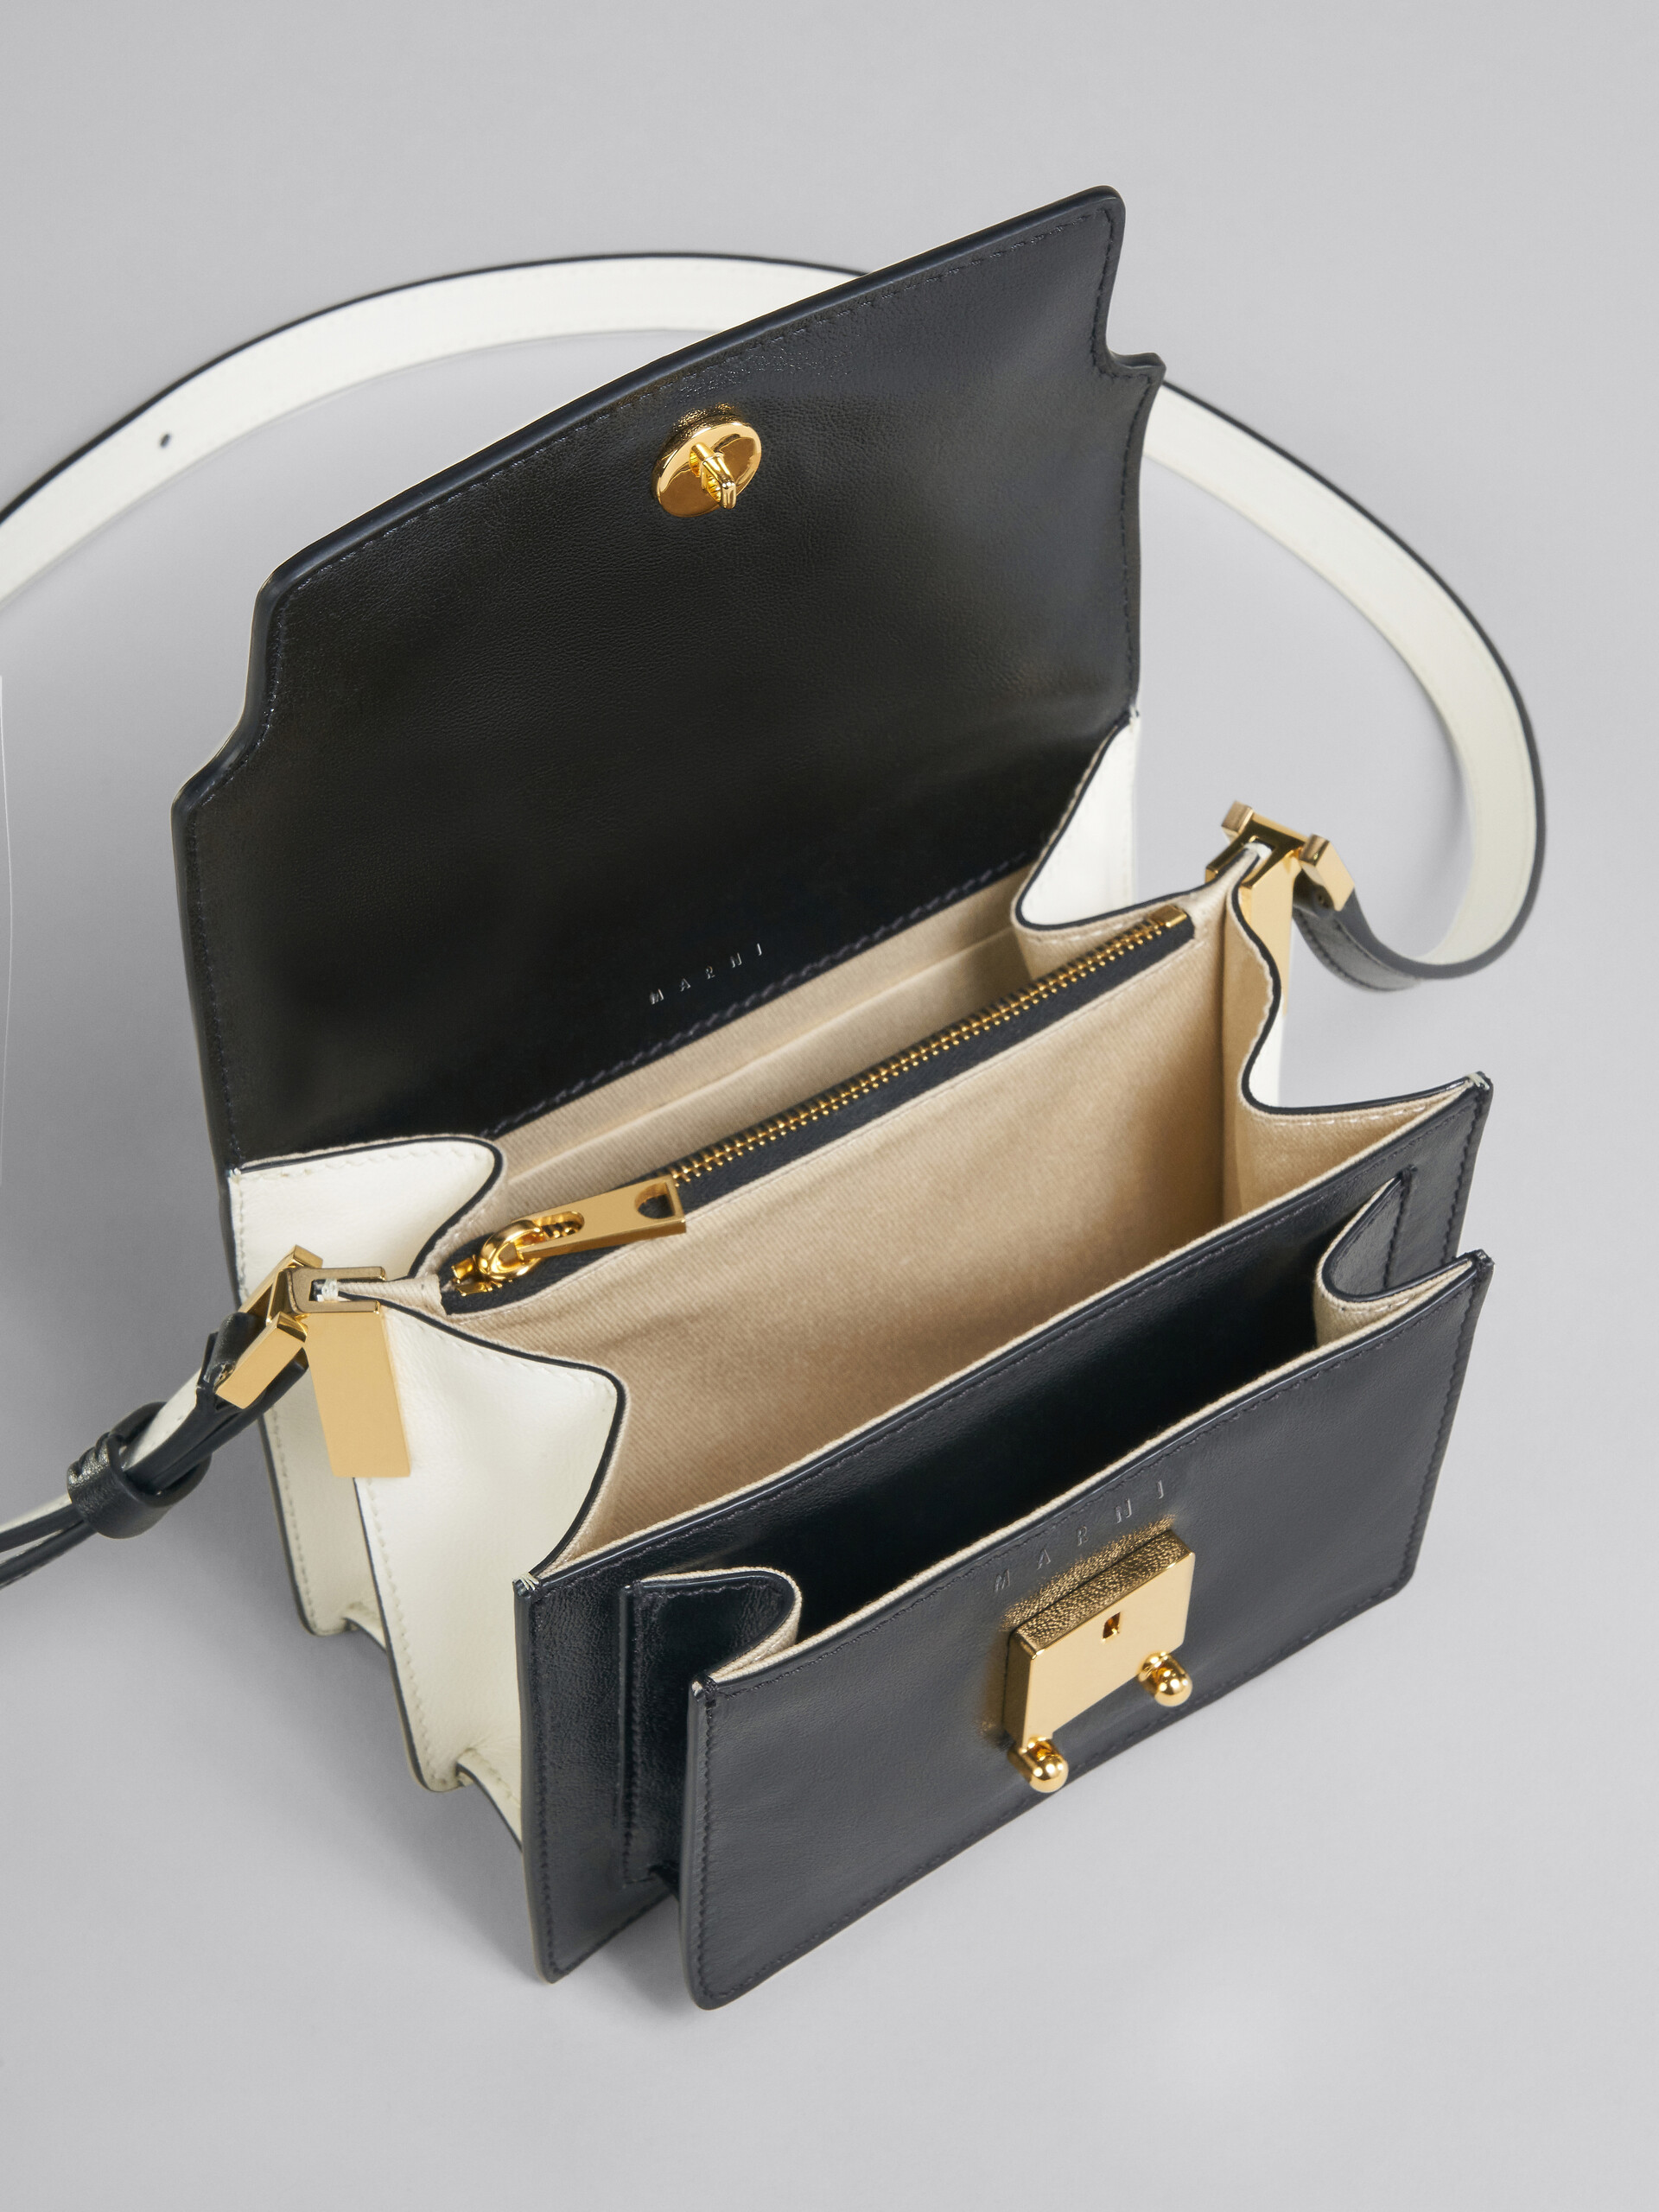 Trunk Soft Mini Leather Shoulder Bag in White - Marni